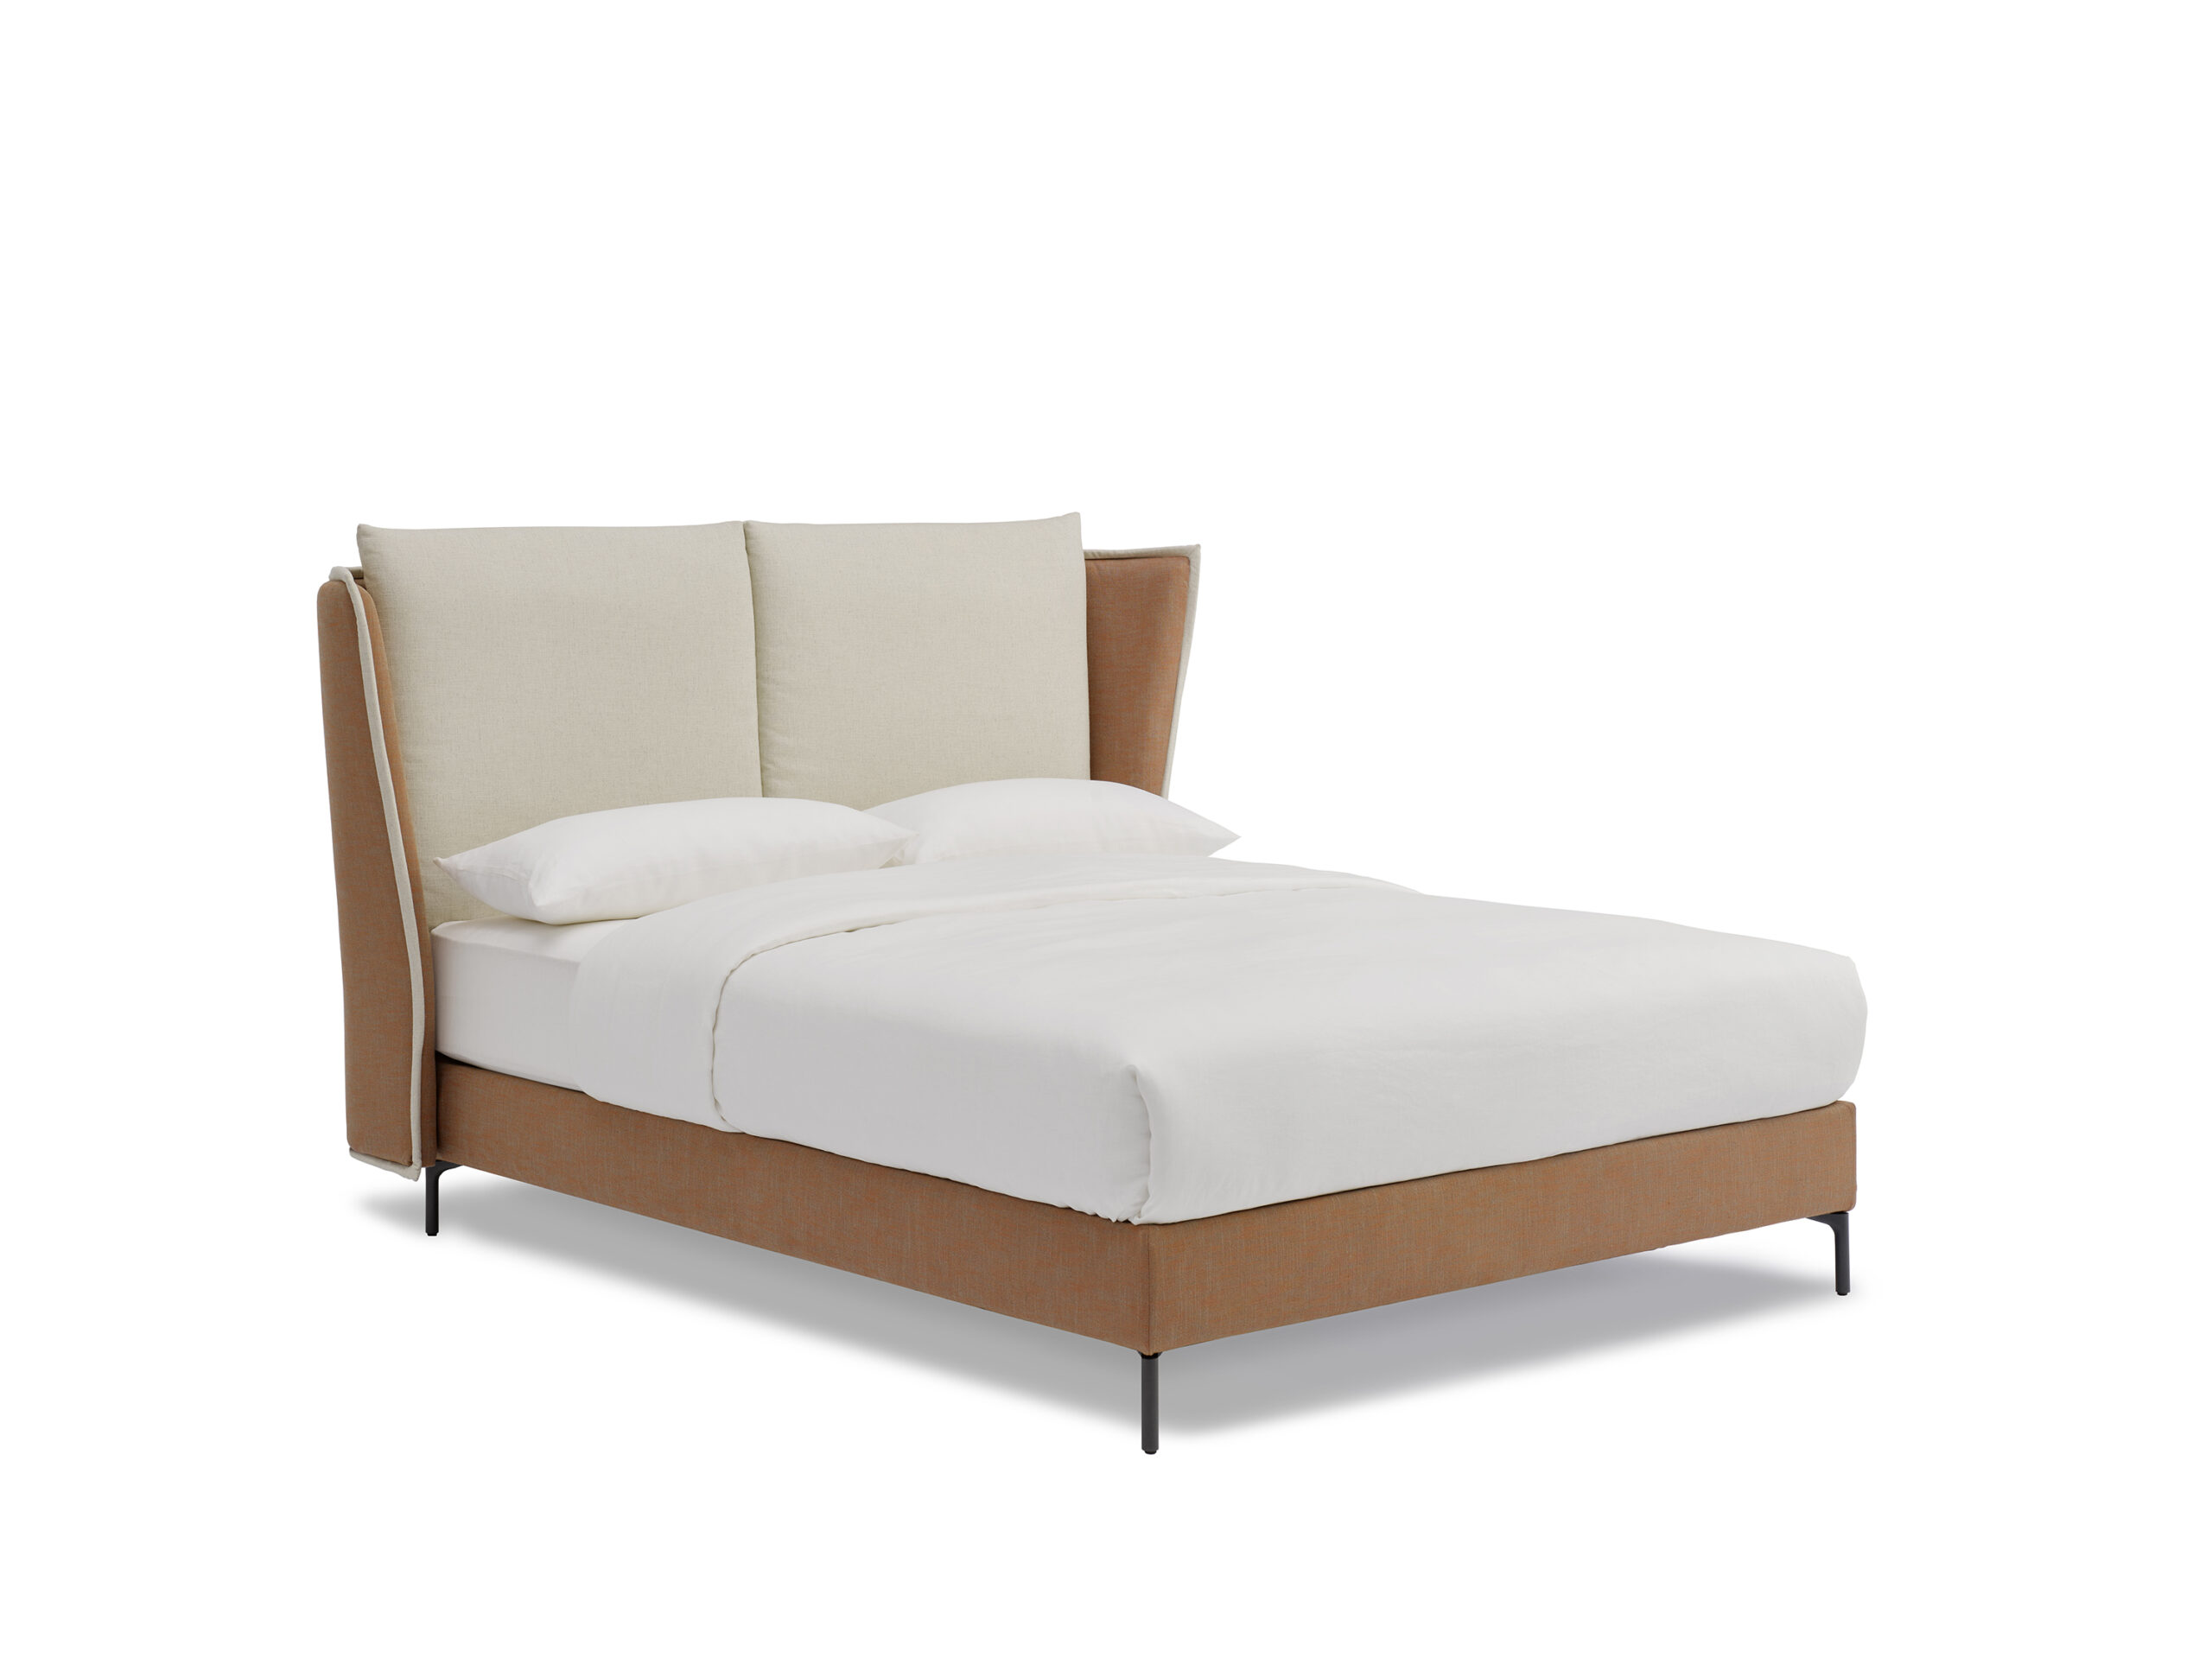 Vela Bed designed by Debiasi Sandri for Schramm